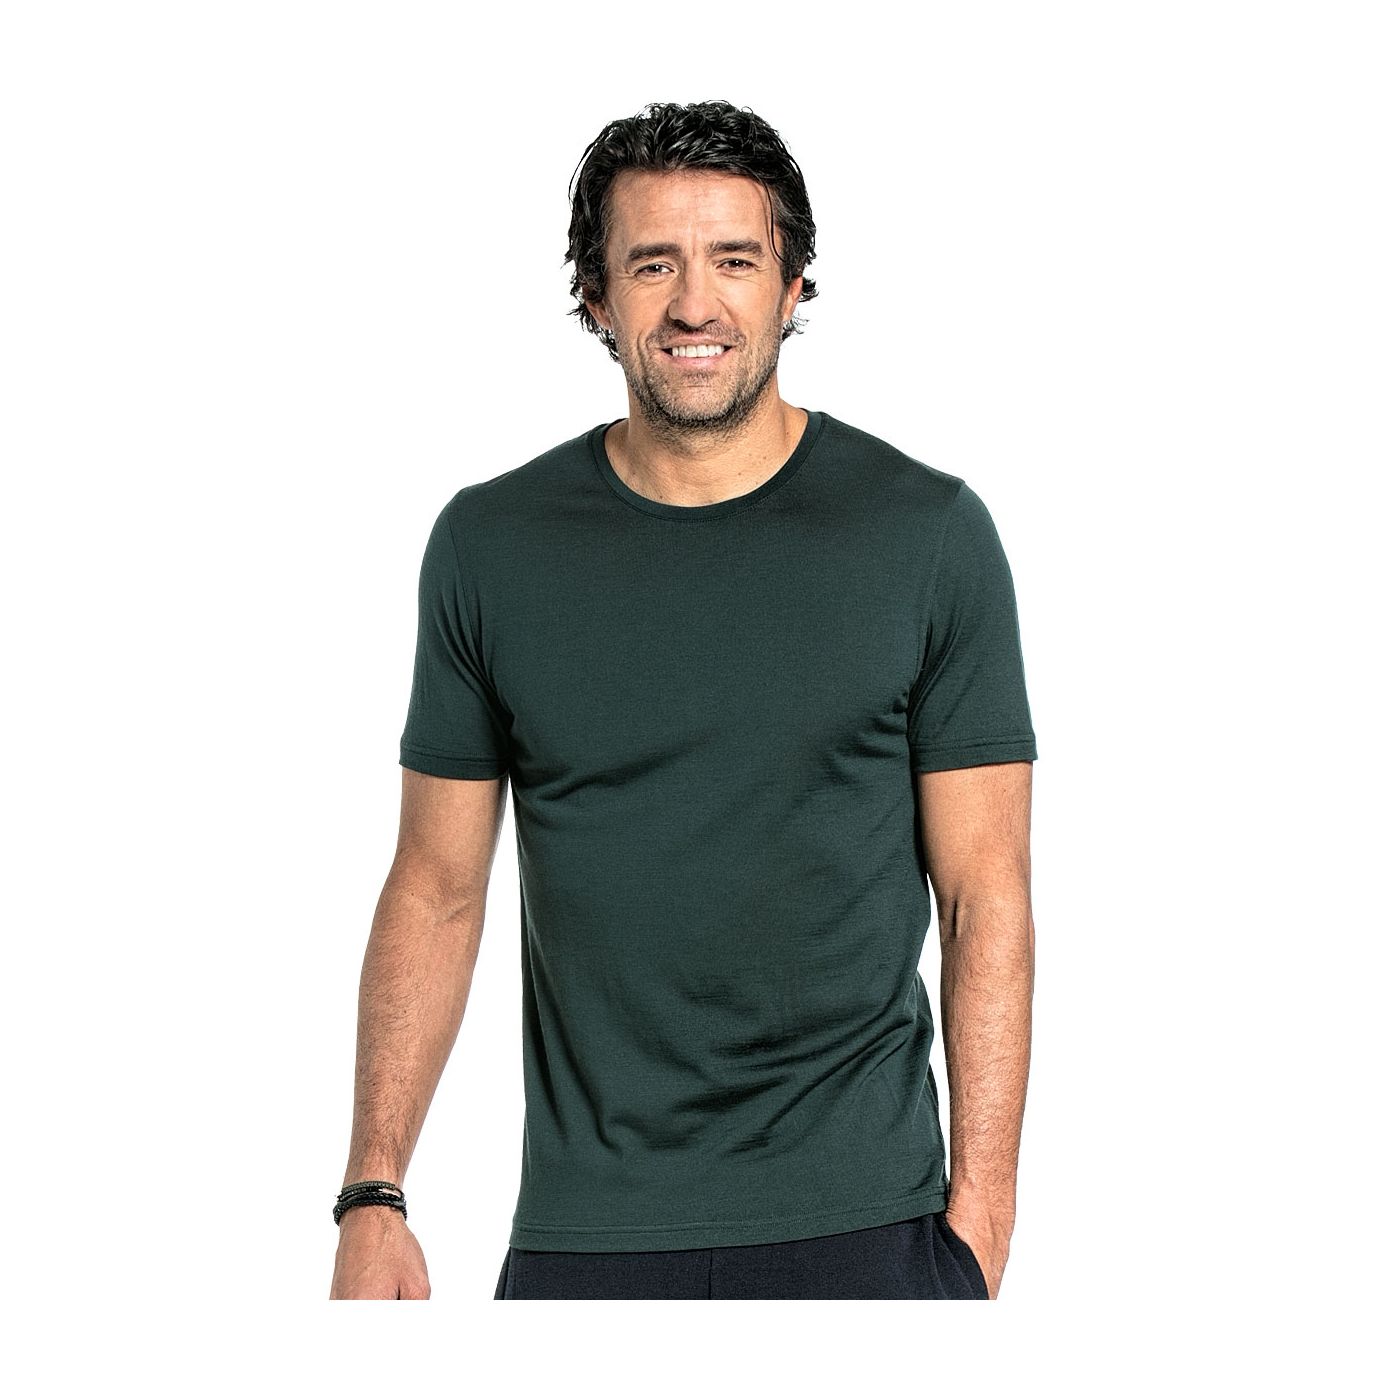 Crew neck T-shirt for men made of Merino wool in Dark green